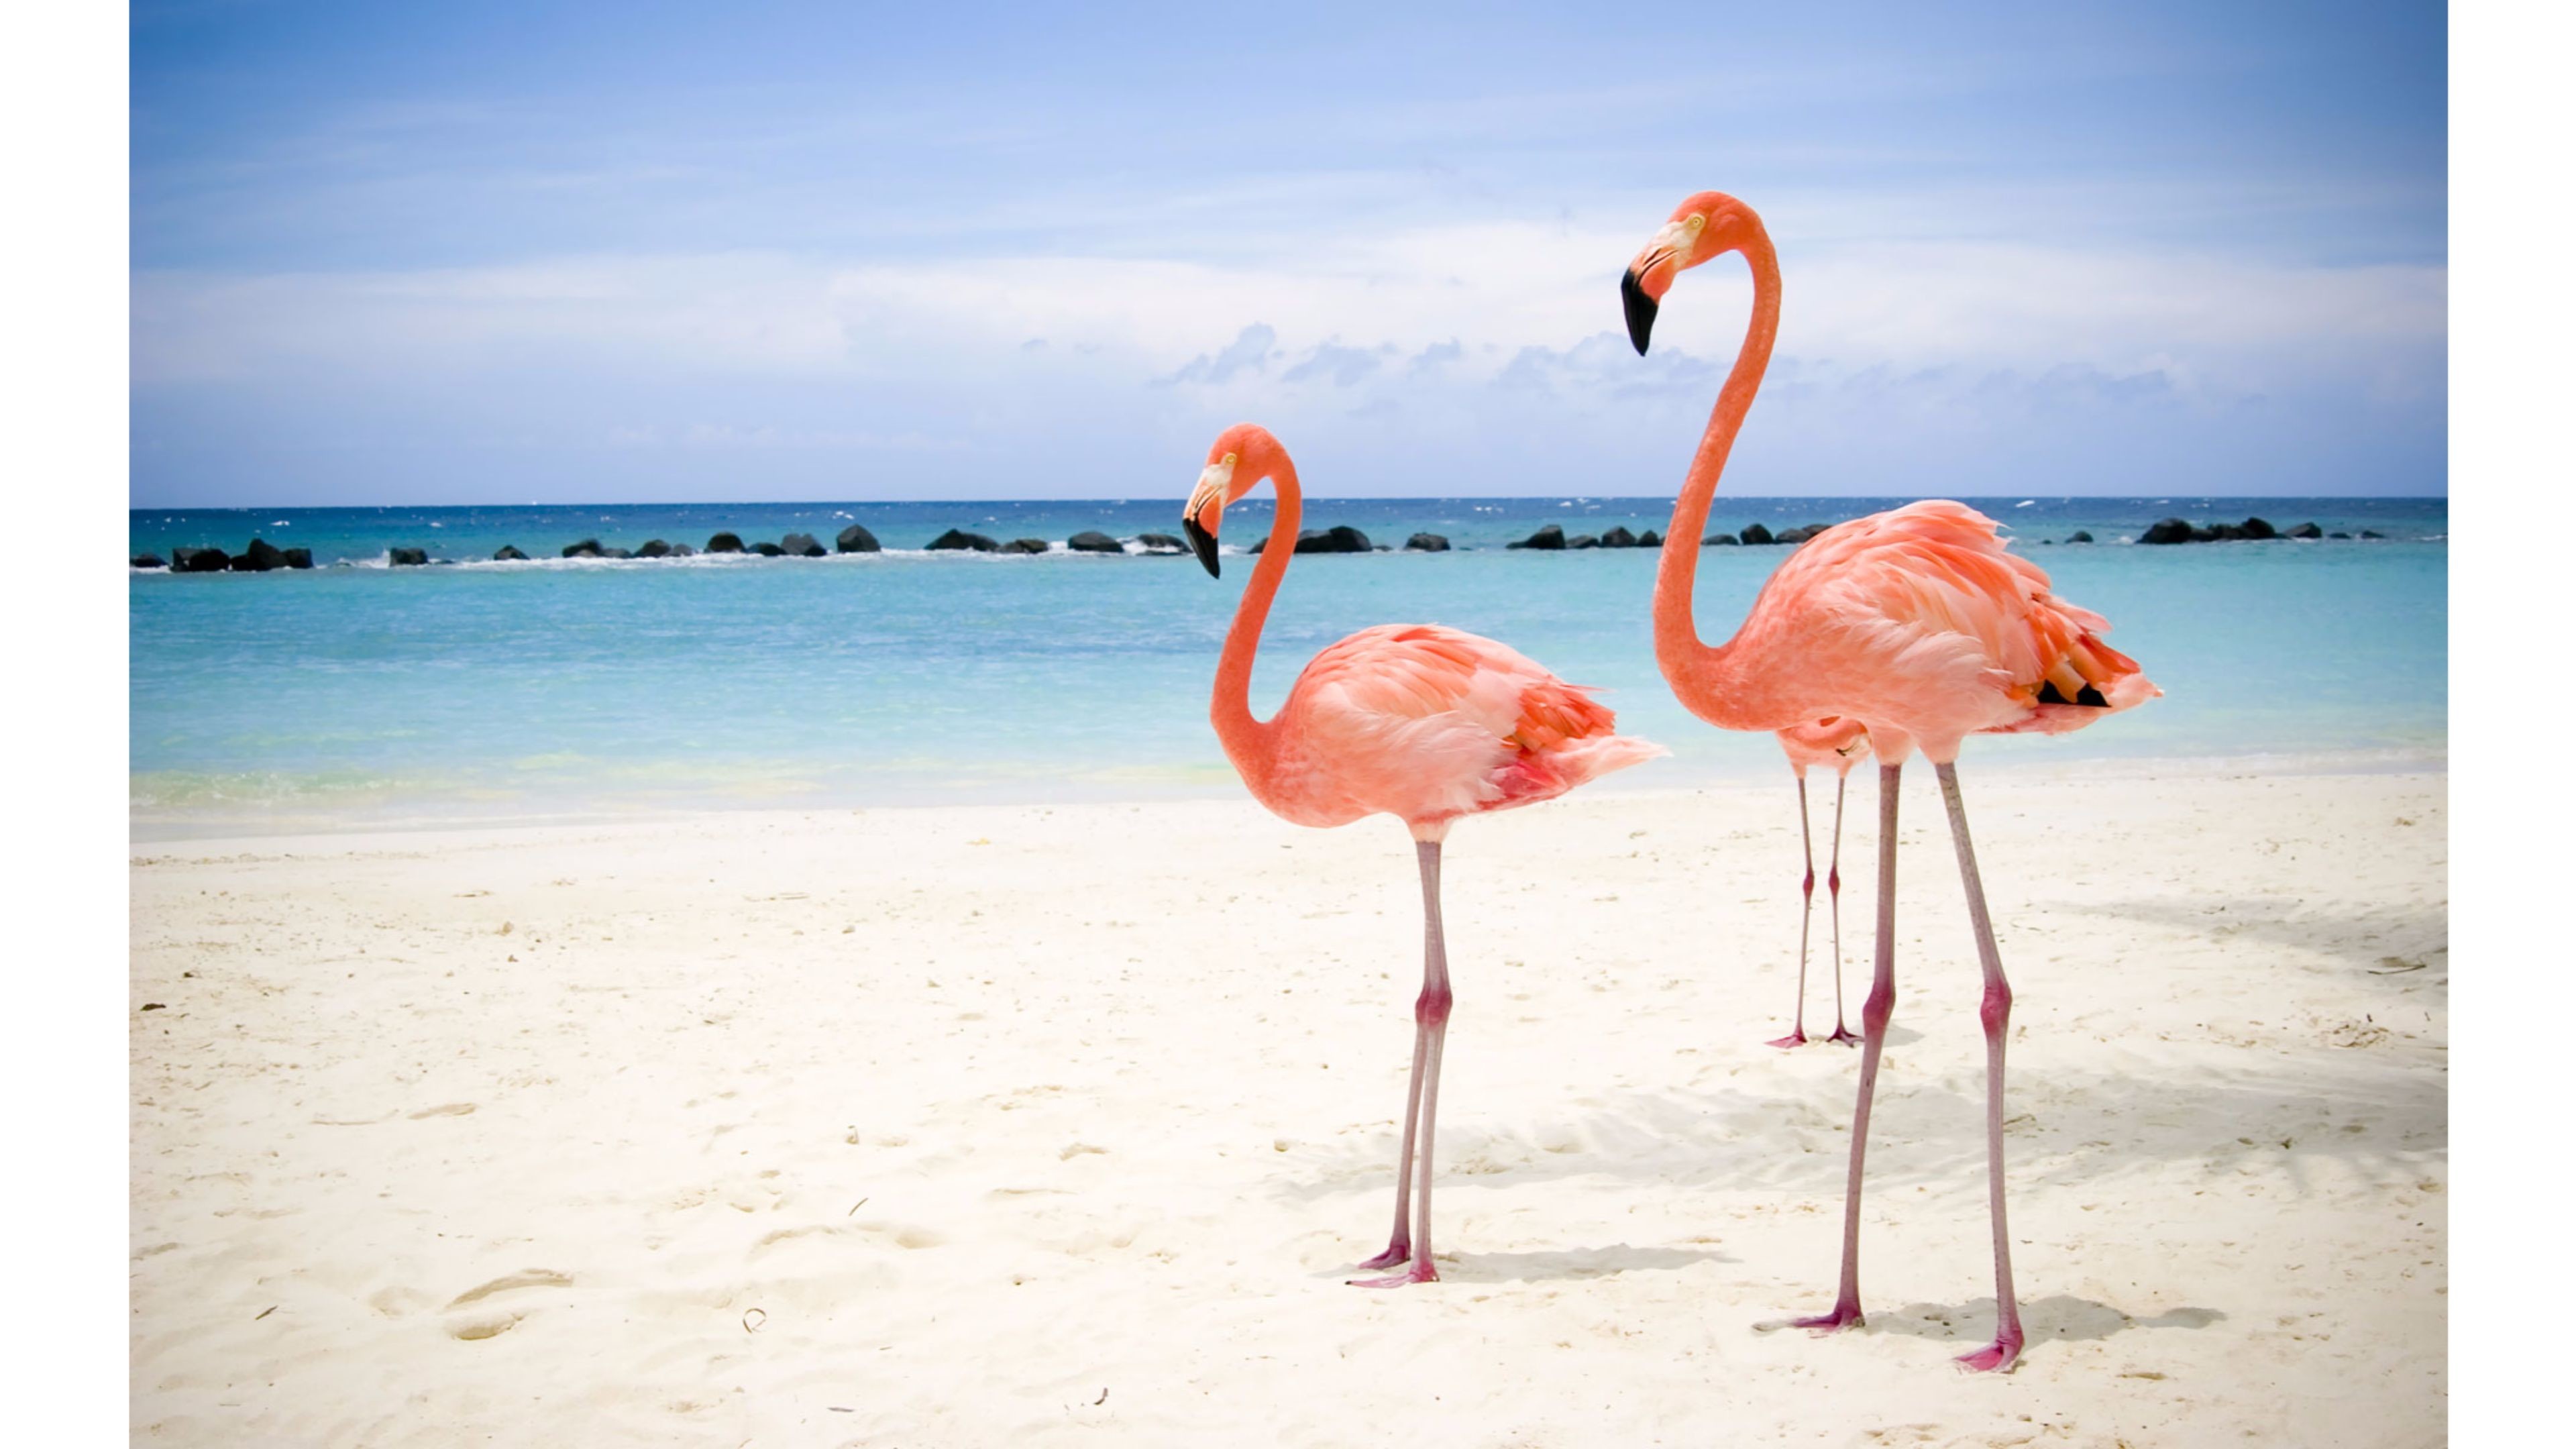 3840x2160, Miami Beach Flamingo 4k Wallpaper 
 Data - Flamingo Wallpaper Hd - HD Wallpaper 